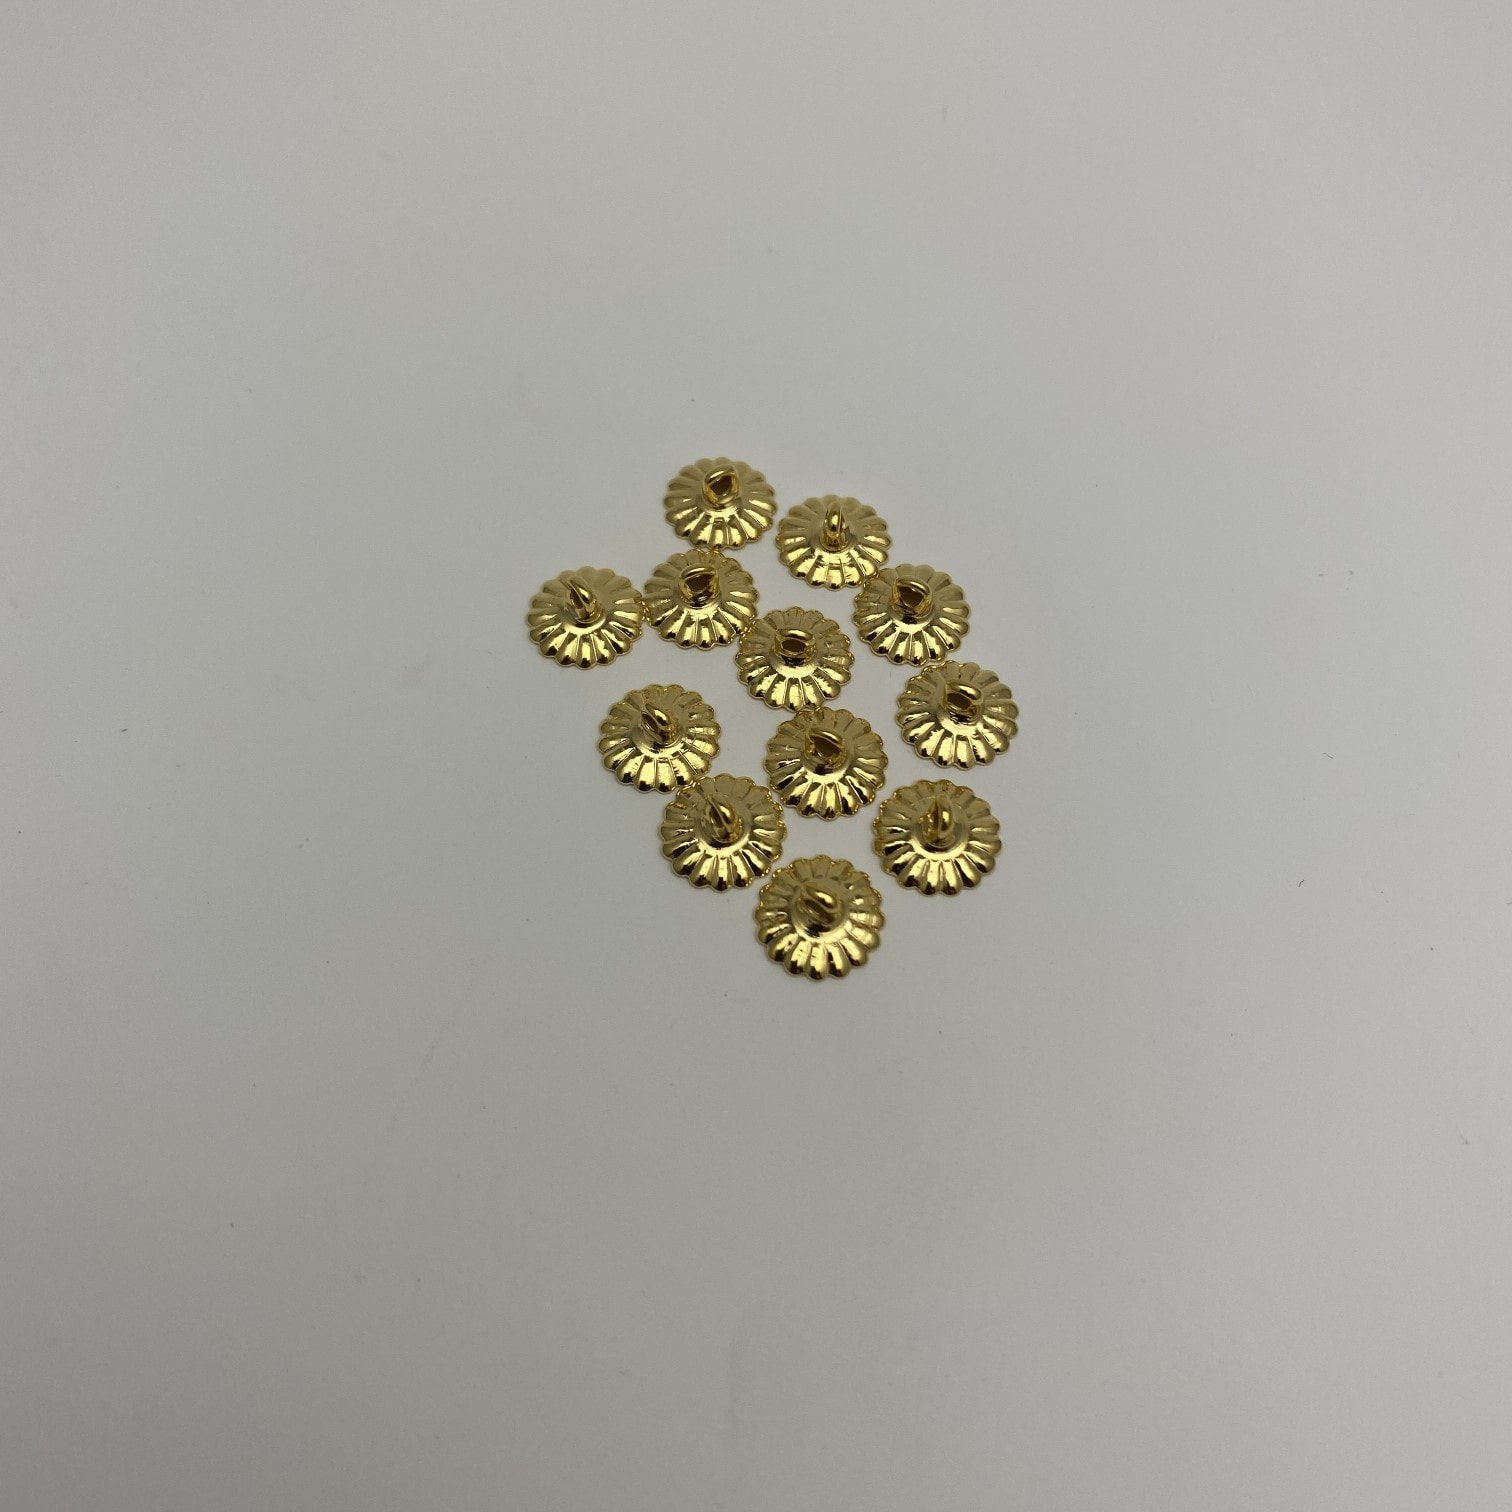 12 Small Gold Ornament Caps